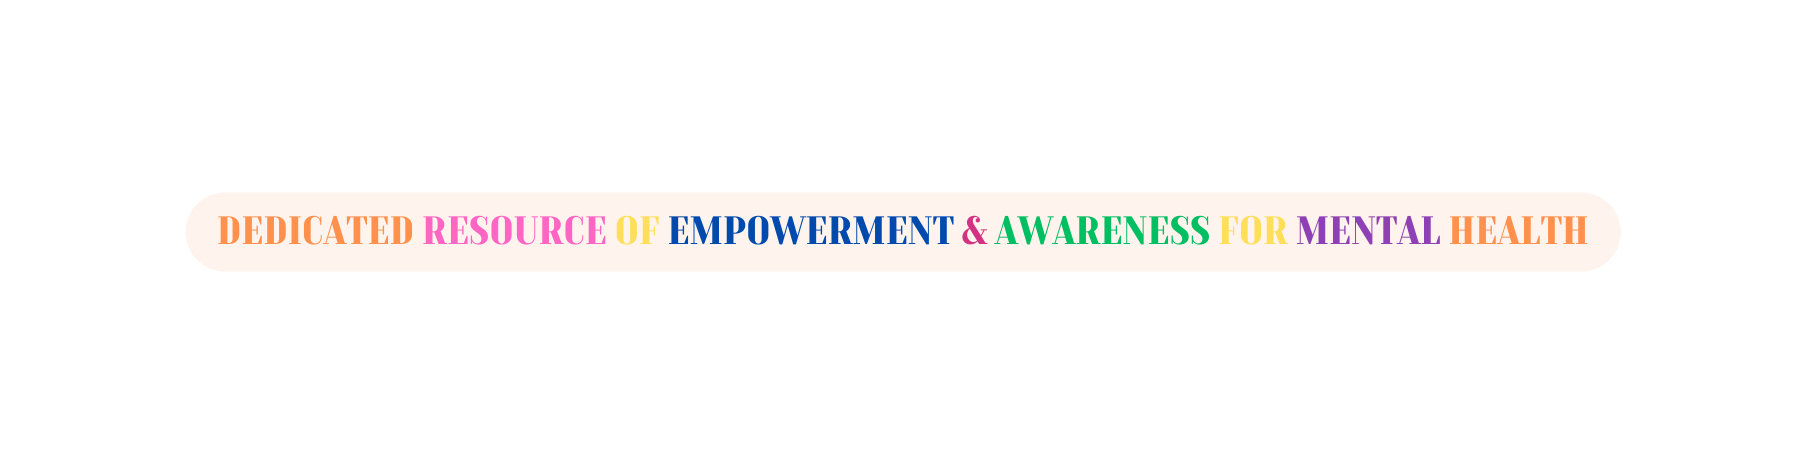 Dedicated resource of empowerment Awareness for mental health